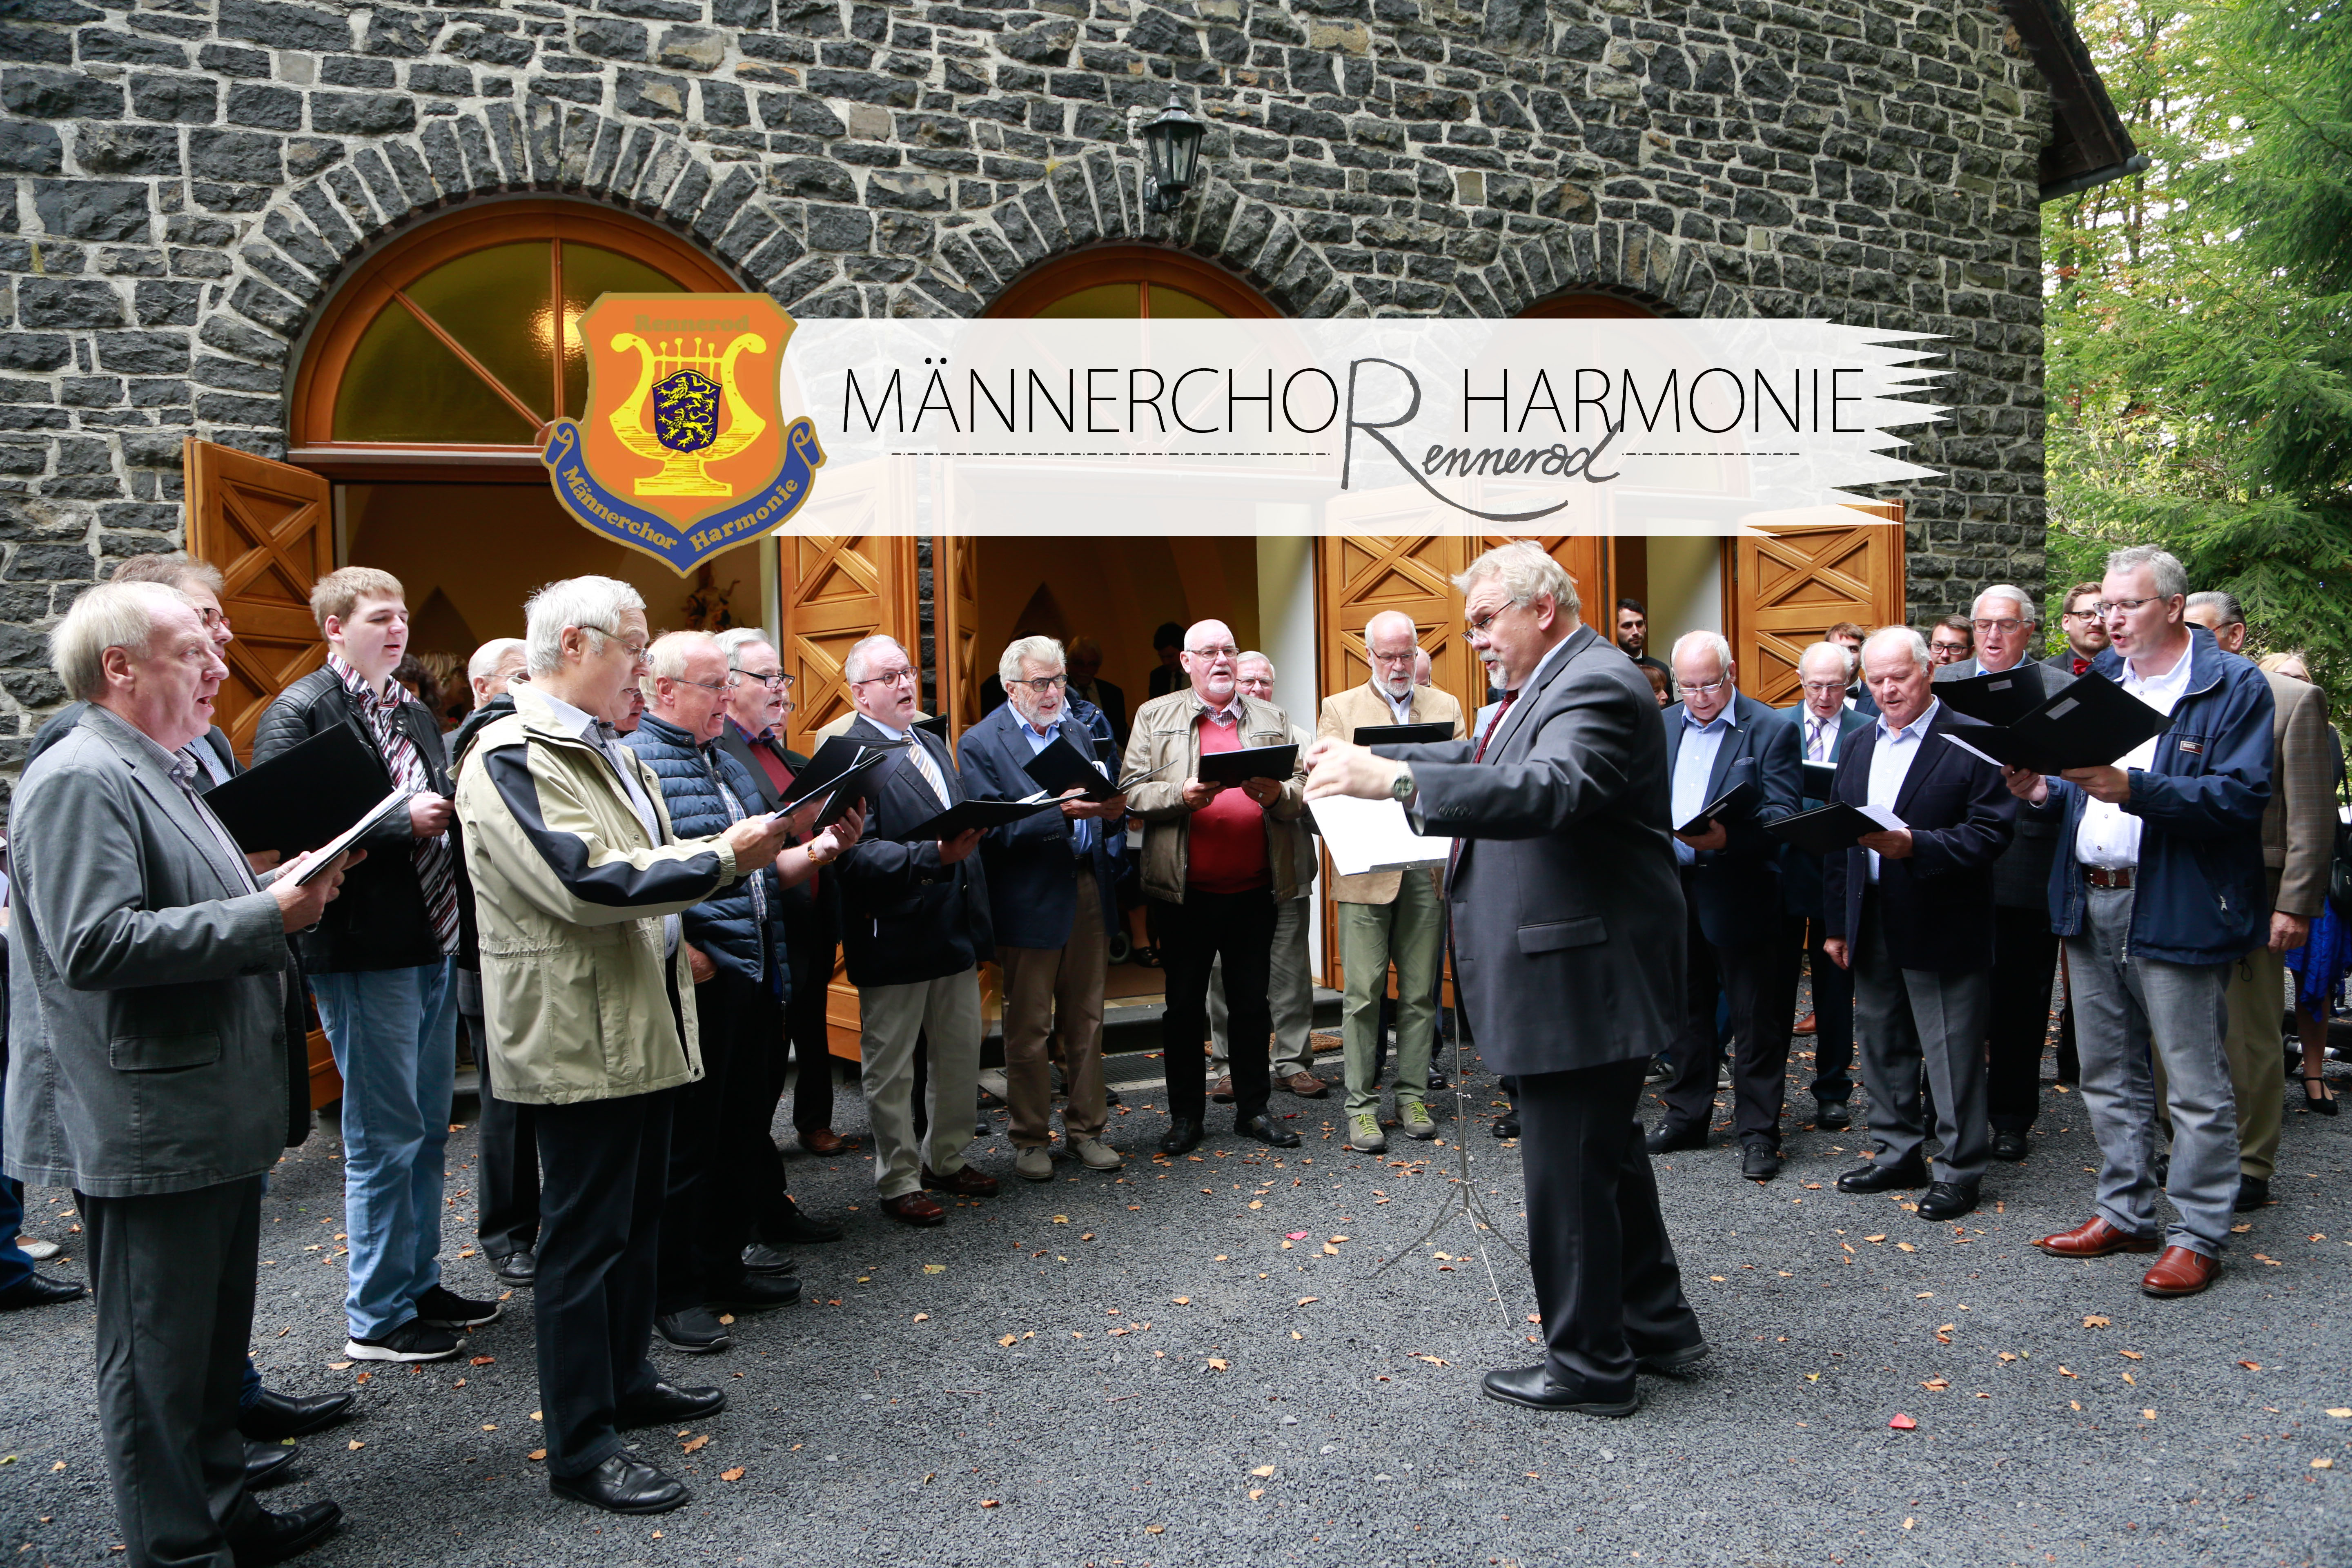 (c) Maennerchor-harmonie-rennerod.de